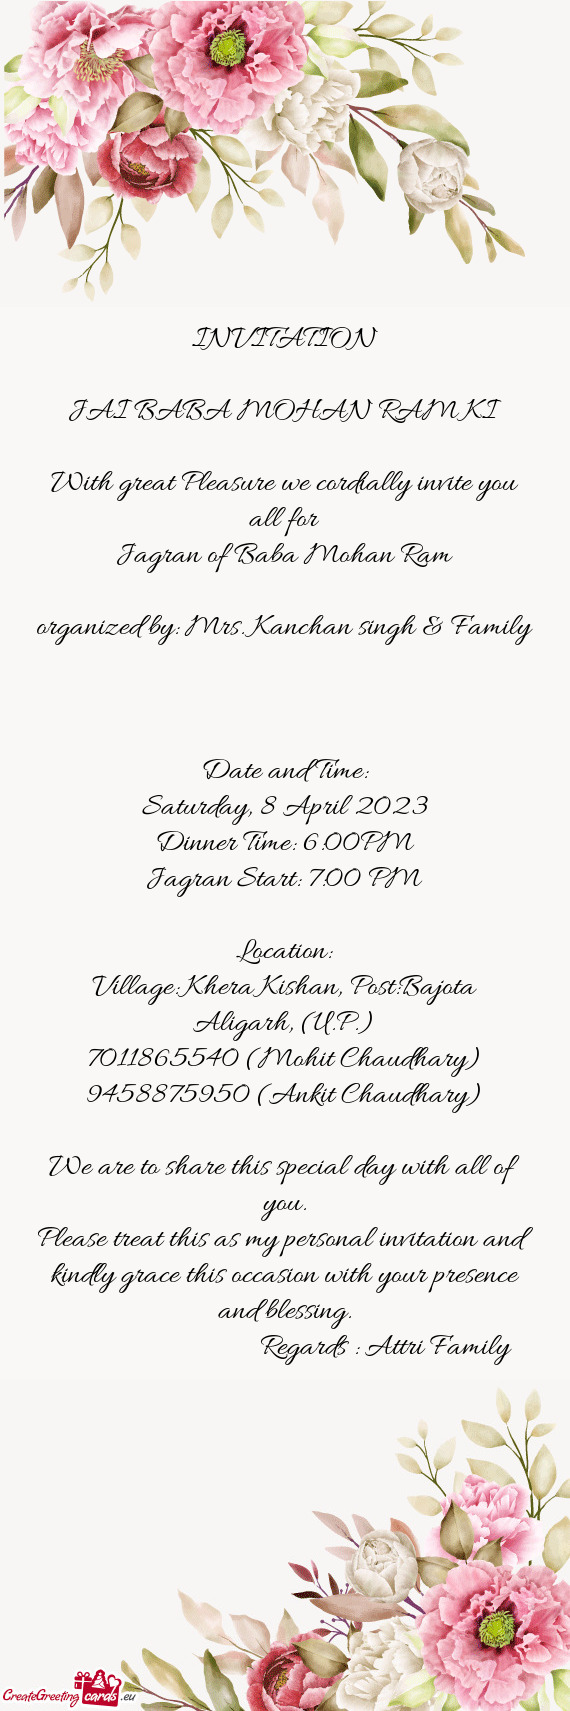 Organized by: Mrs. Kanchan singh & Family